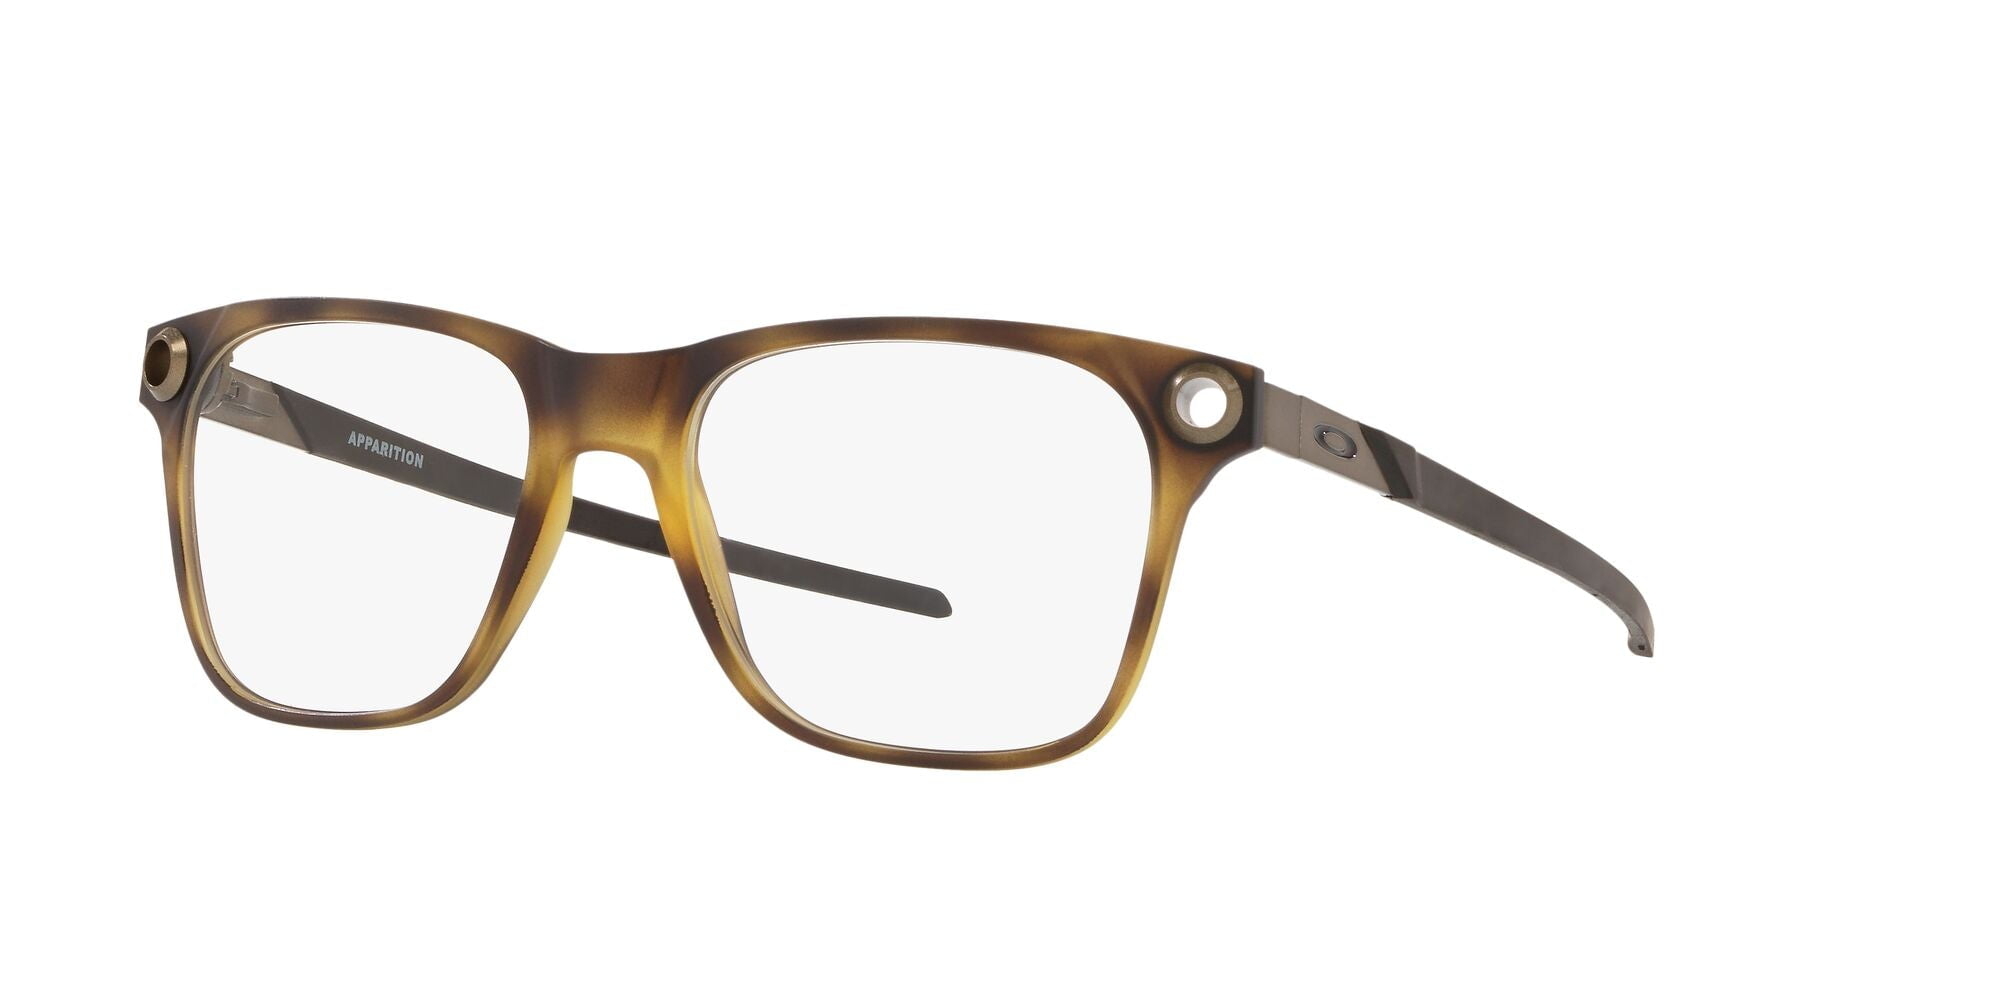 Oakley eyeglasses OX8152 Apparition (07) satin brown tortoise with demo  lenses, 55mm 